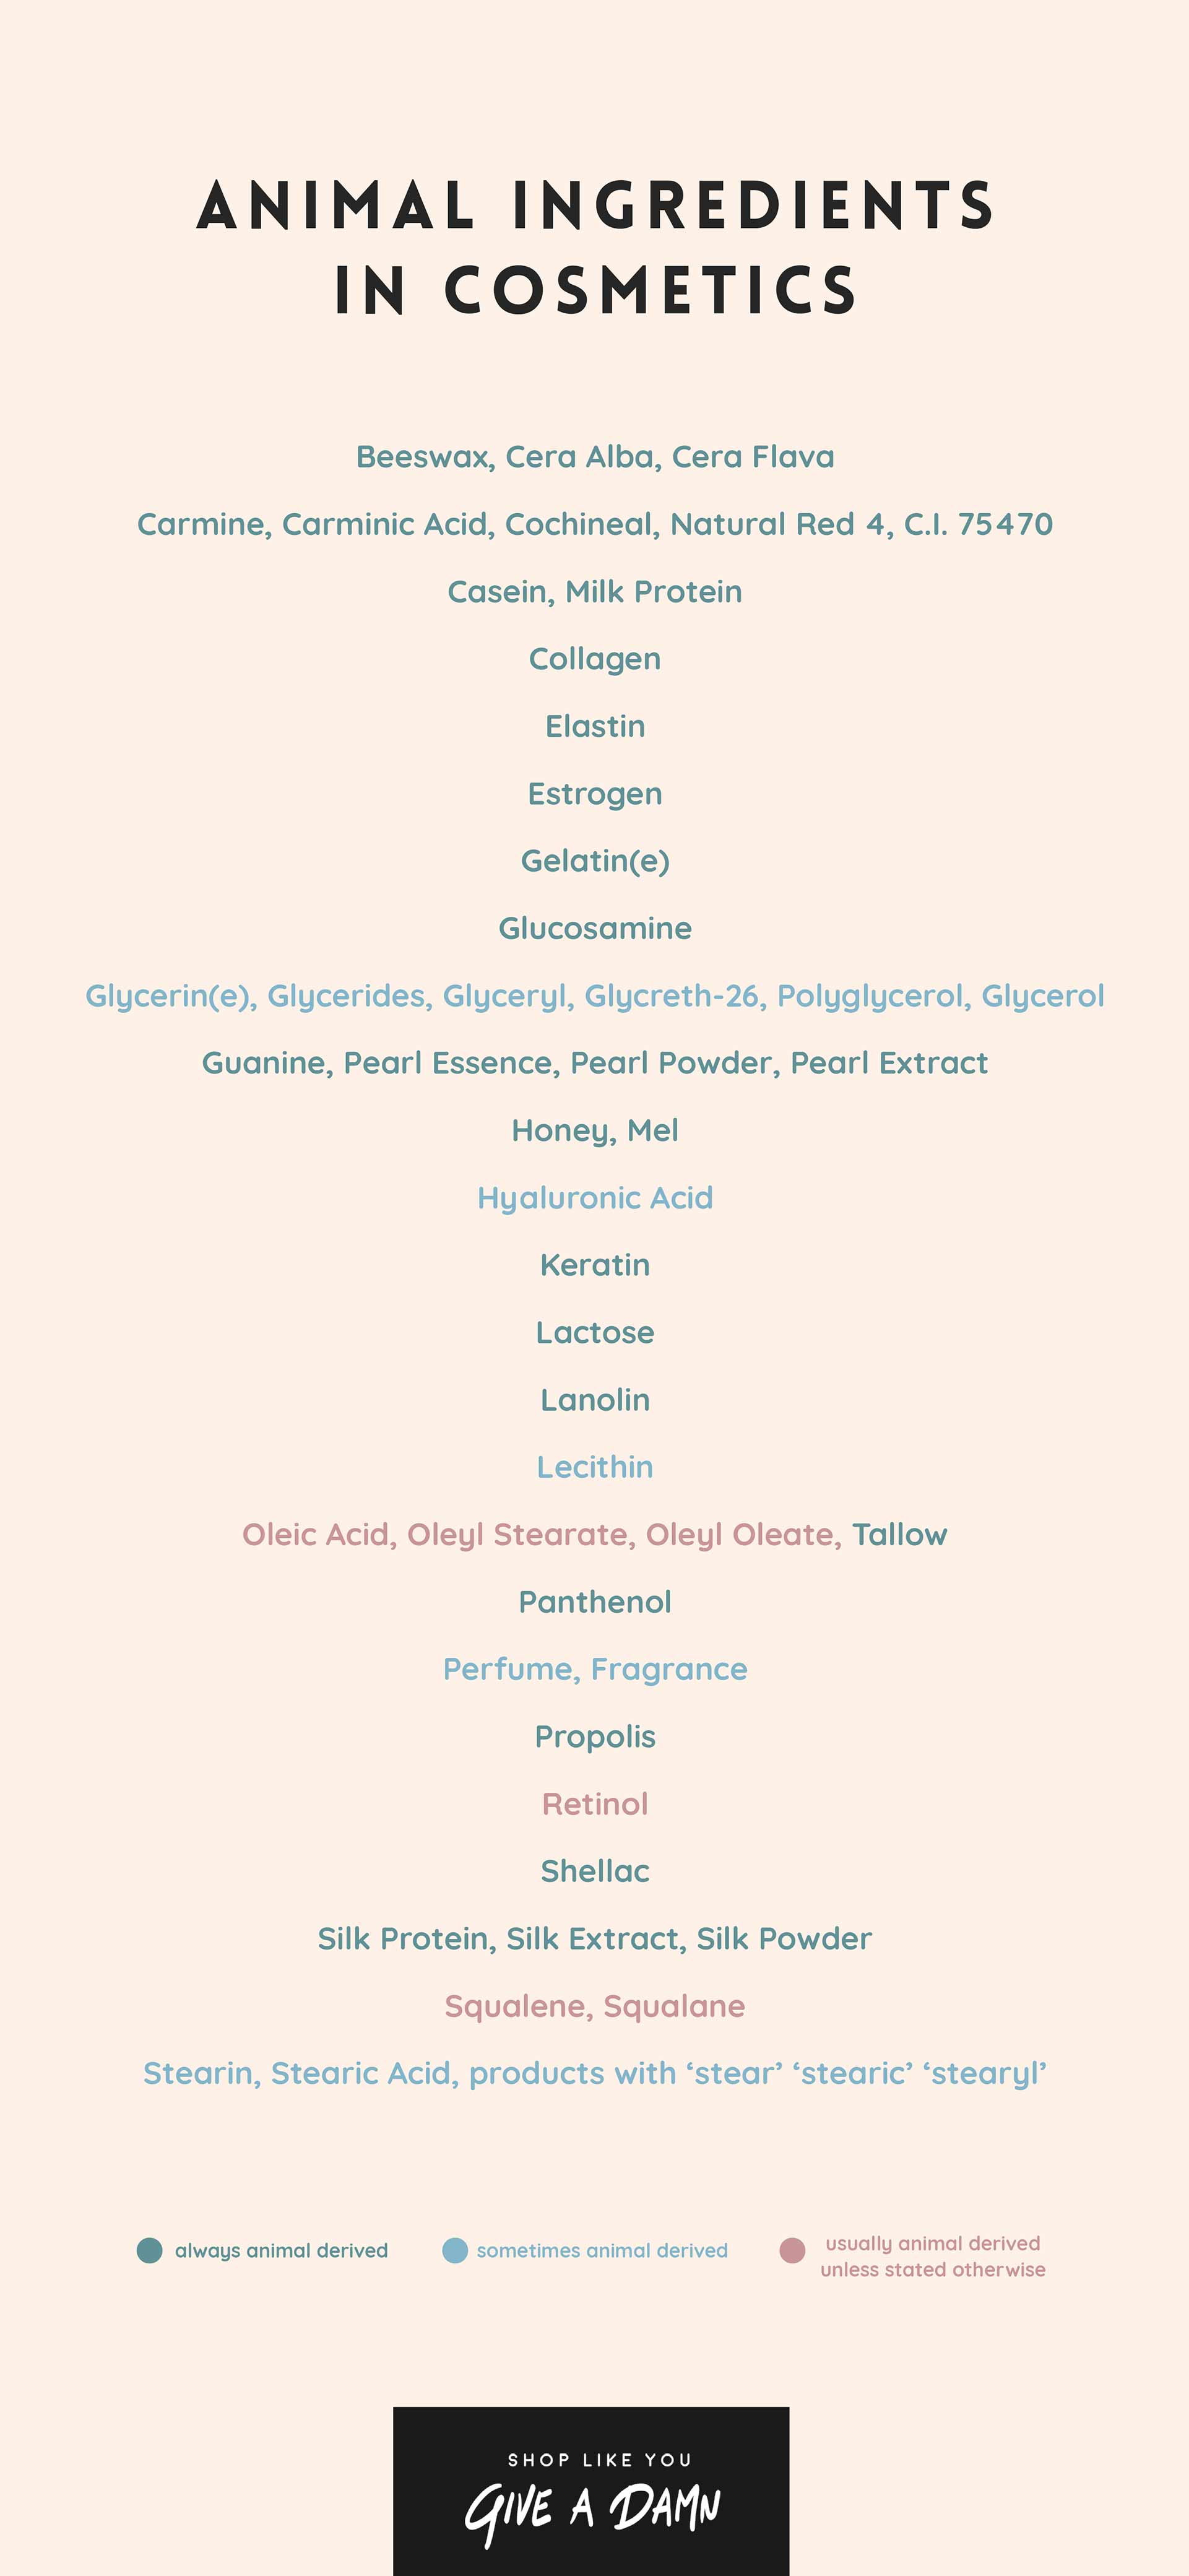 A vegan guide: 25 animal ingredients in cosmetics